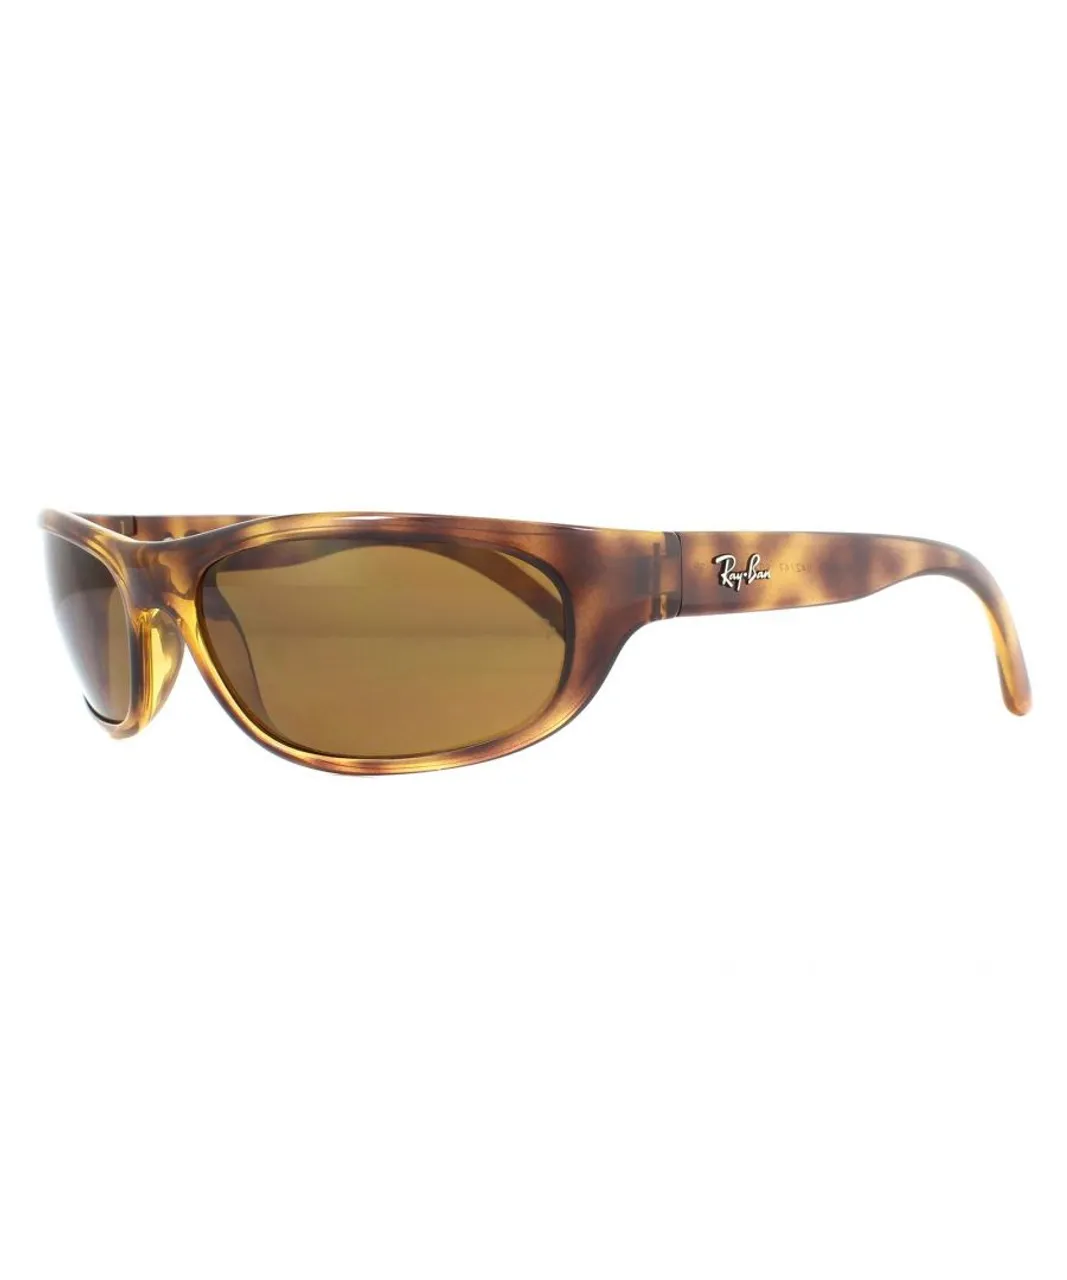 Ray-Ban Mens Sunglasses RB4033 642/47 Havana Brown Polarized - One